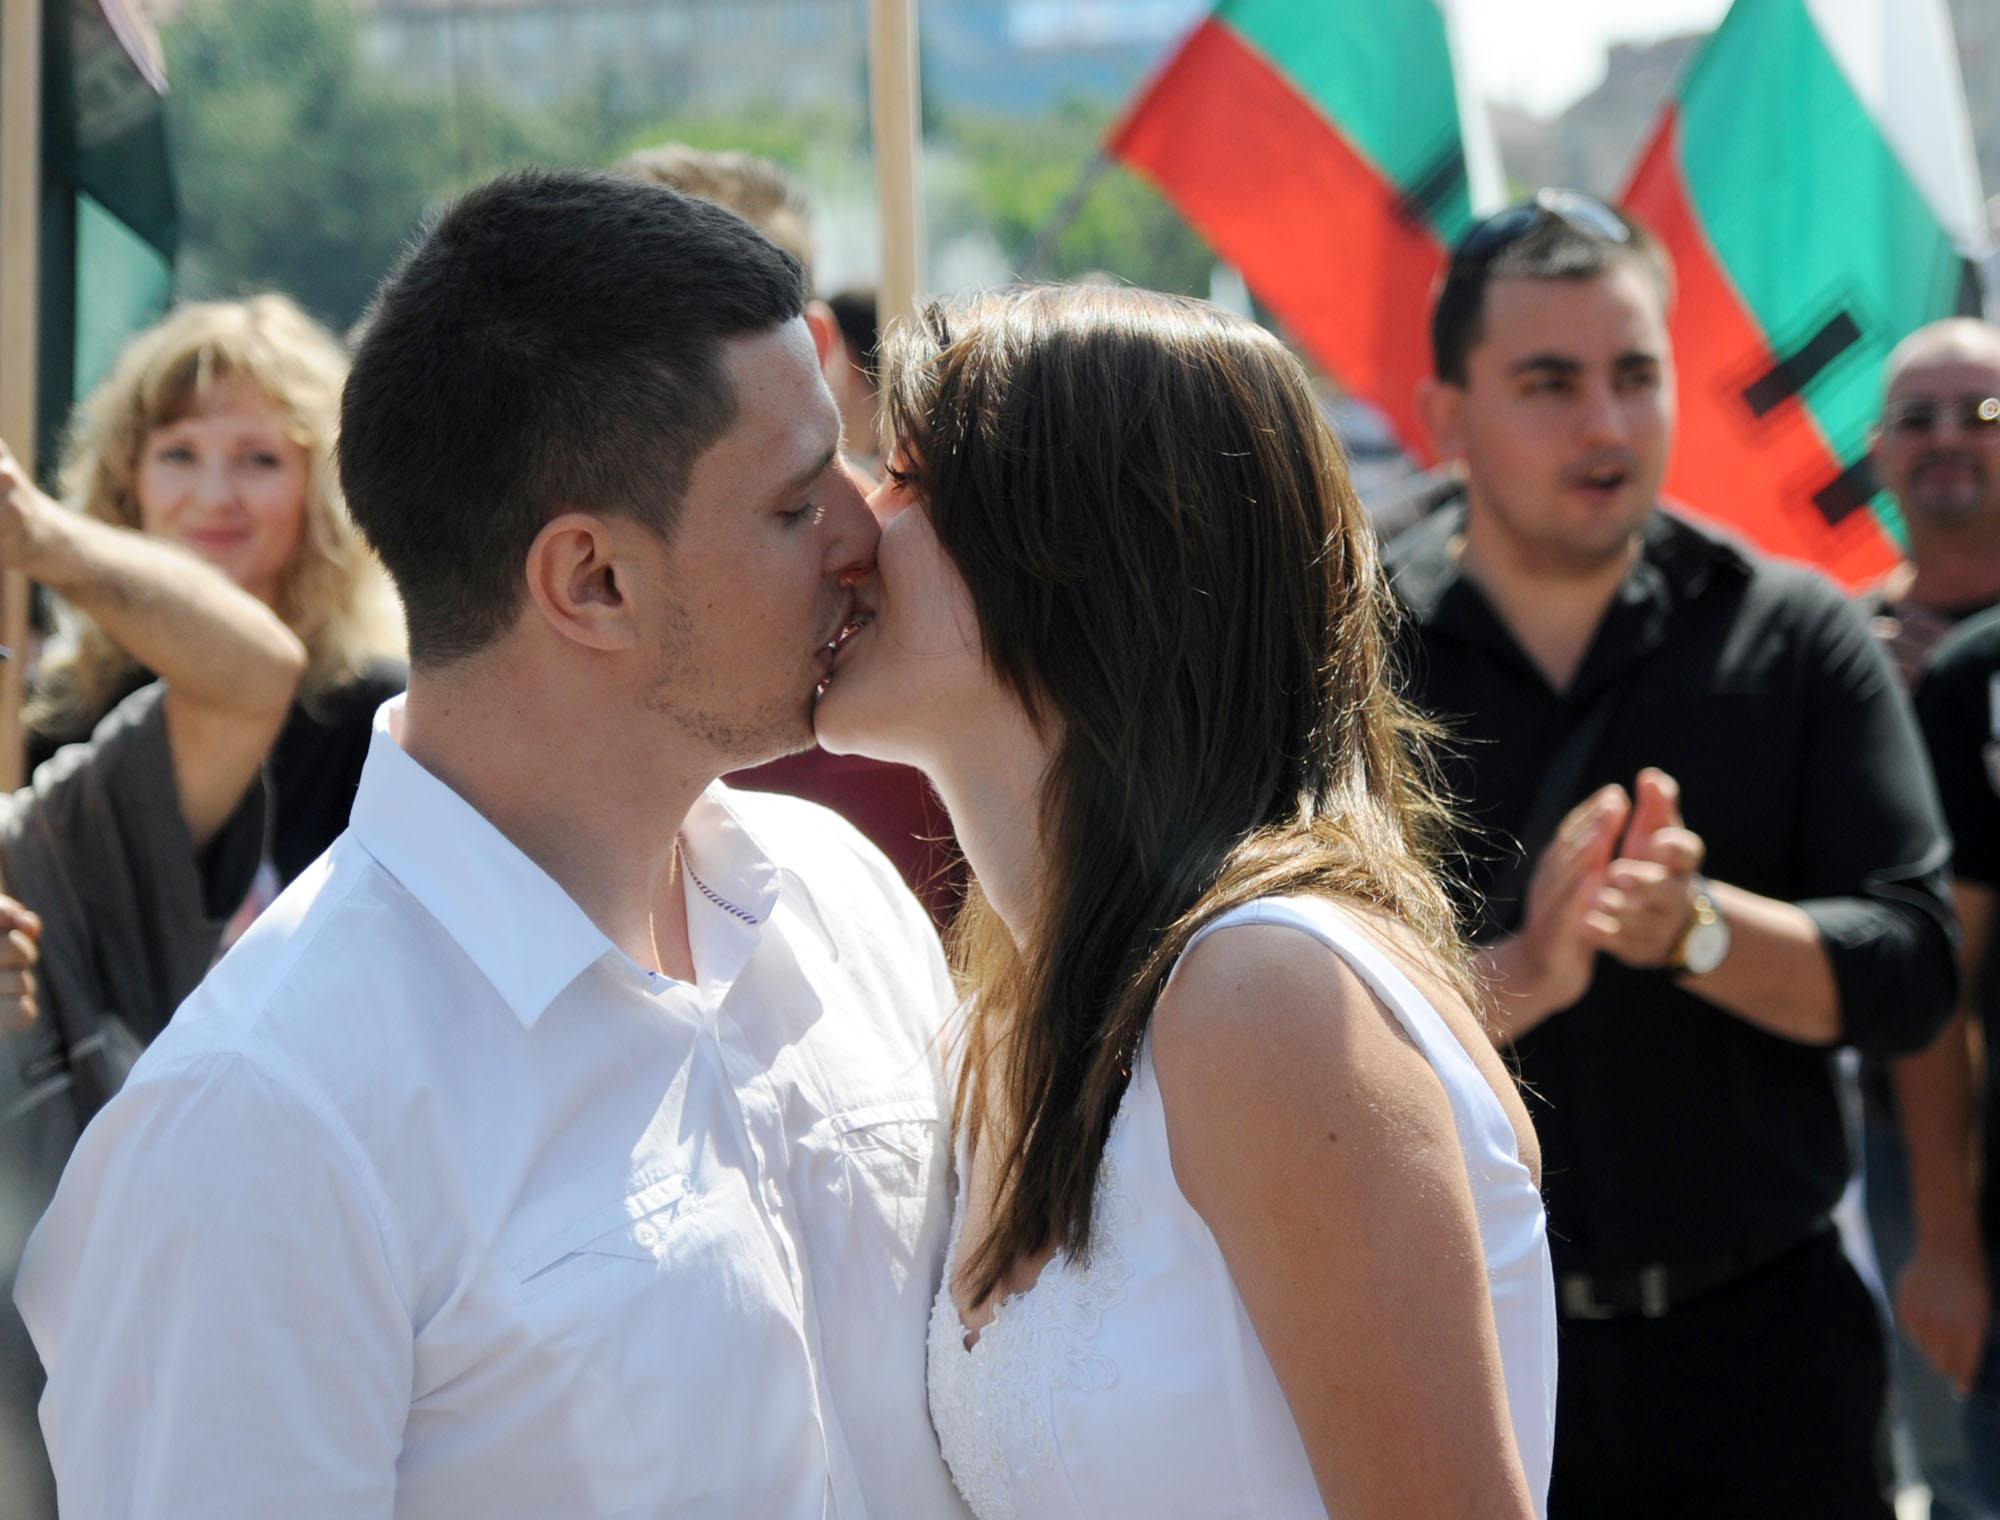 Сватба увенча шествието срещу “София прайд”